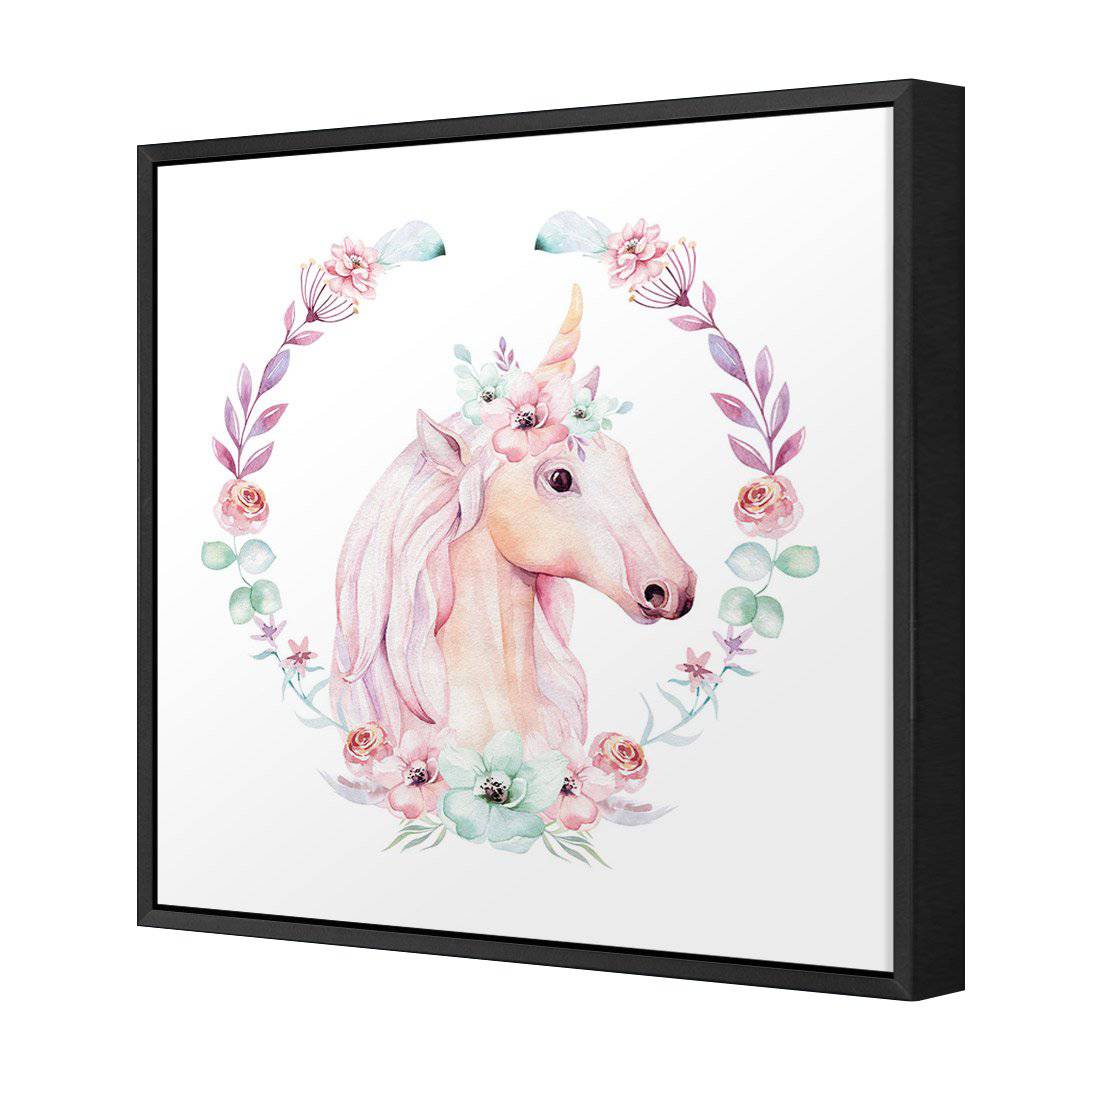 Fairytale Pony Canvas Art-Canvas-Wall Art Designs-30x30cm-Canvas - Black Frame-Wall Art Designs